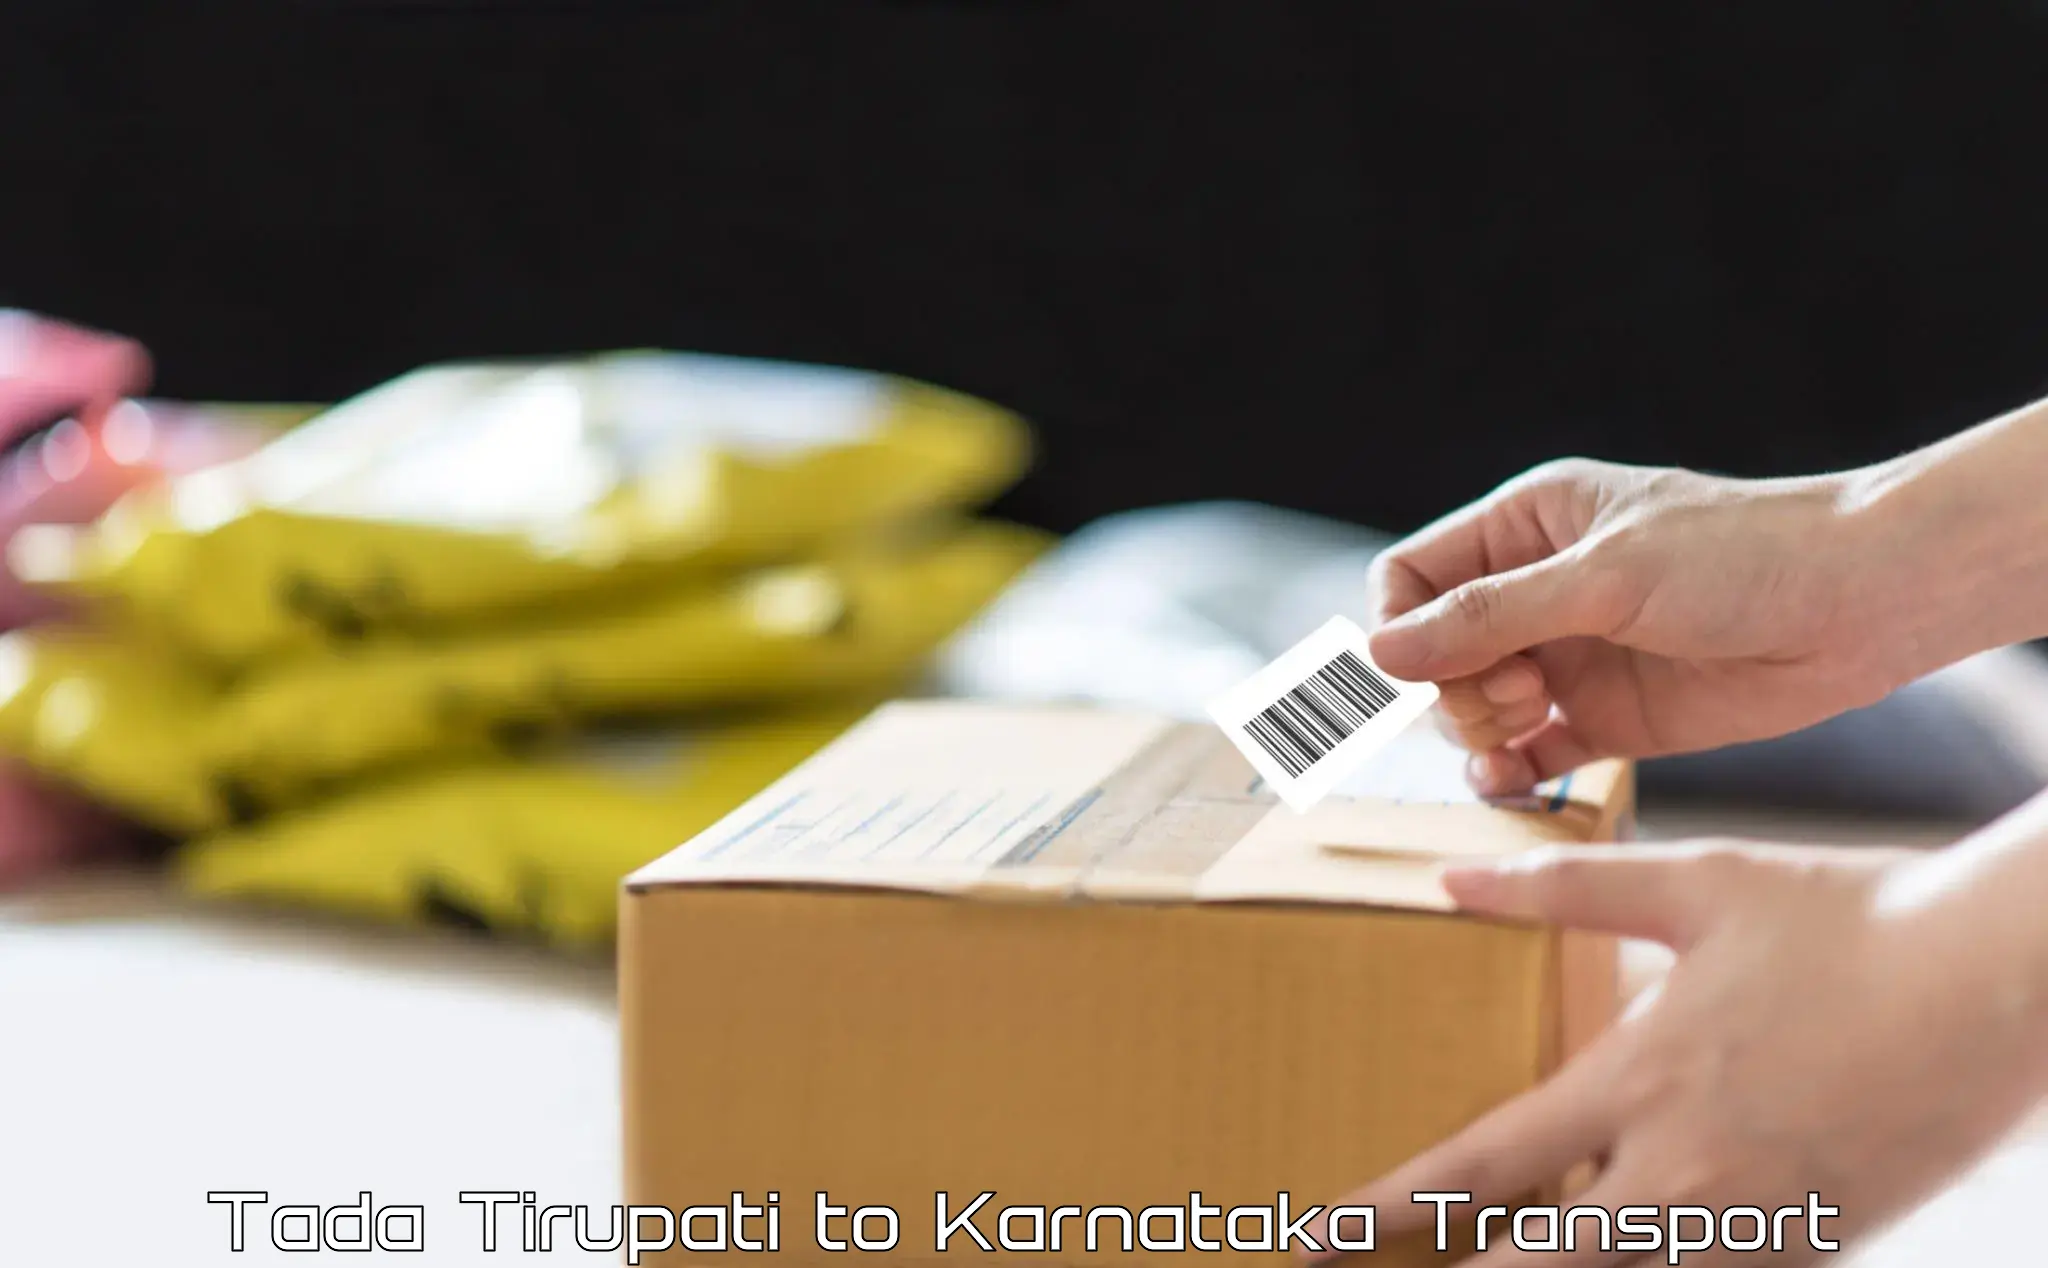 Delivery service Tada Tirupati to Magadi